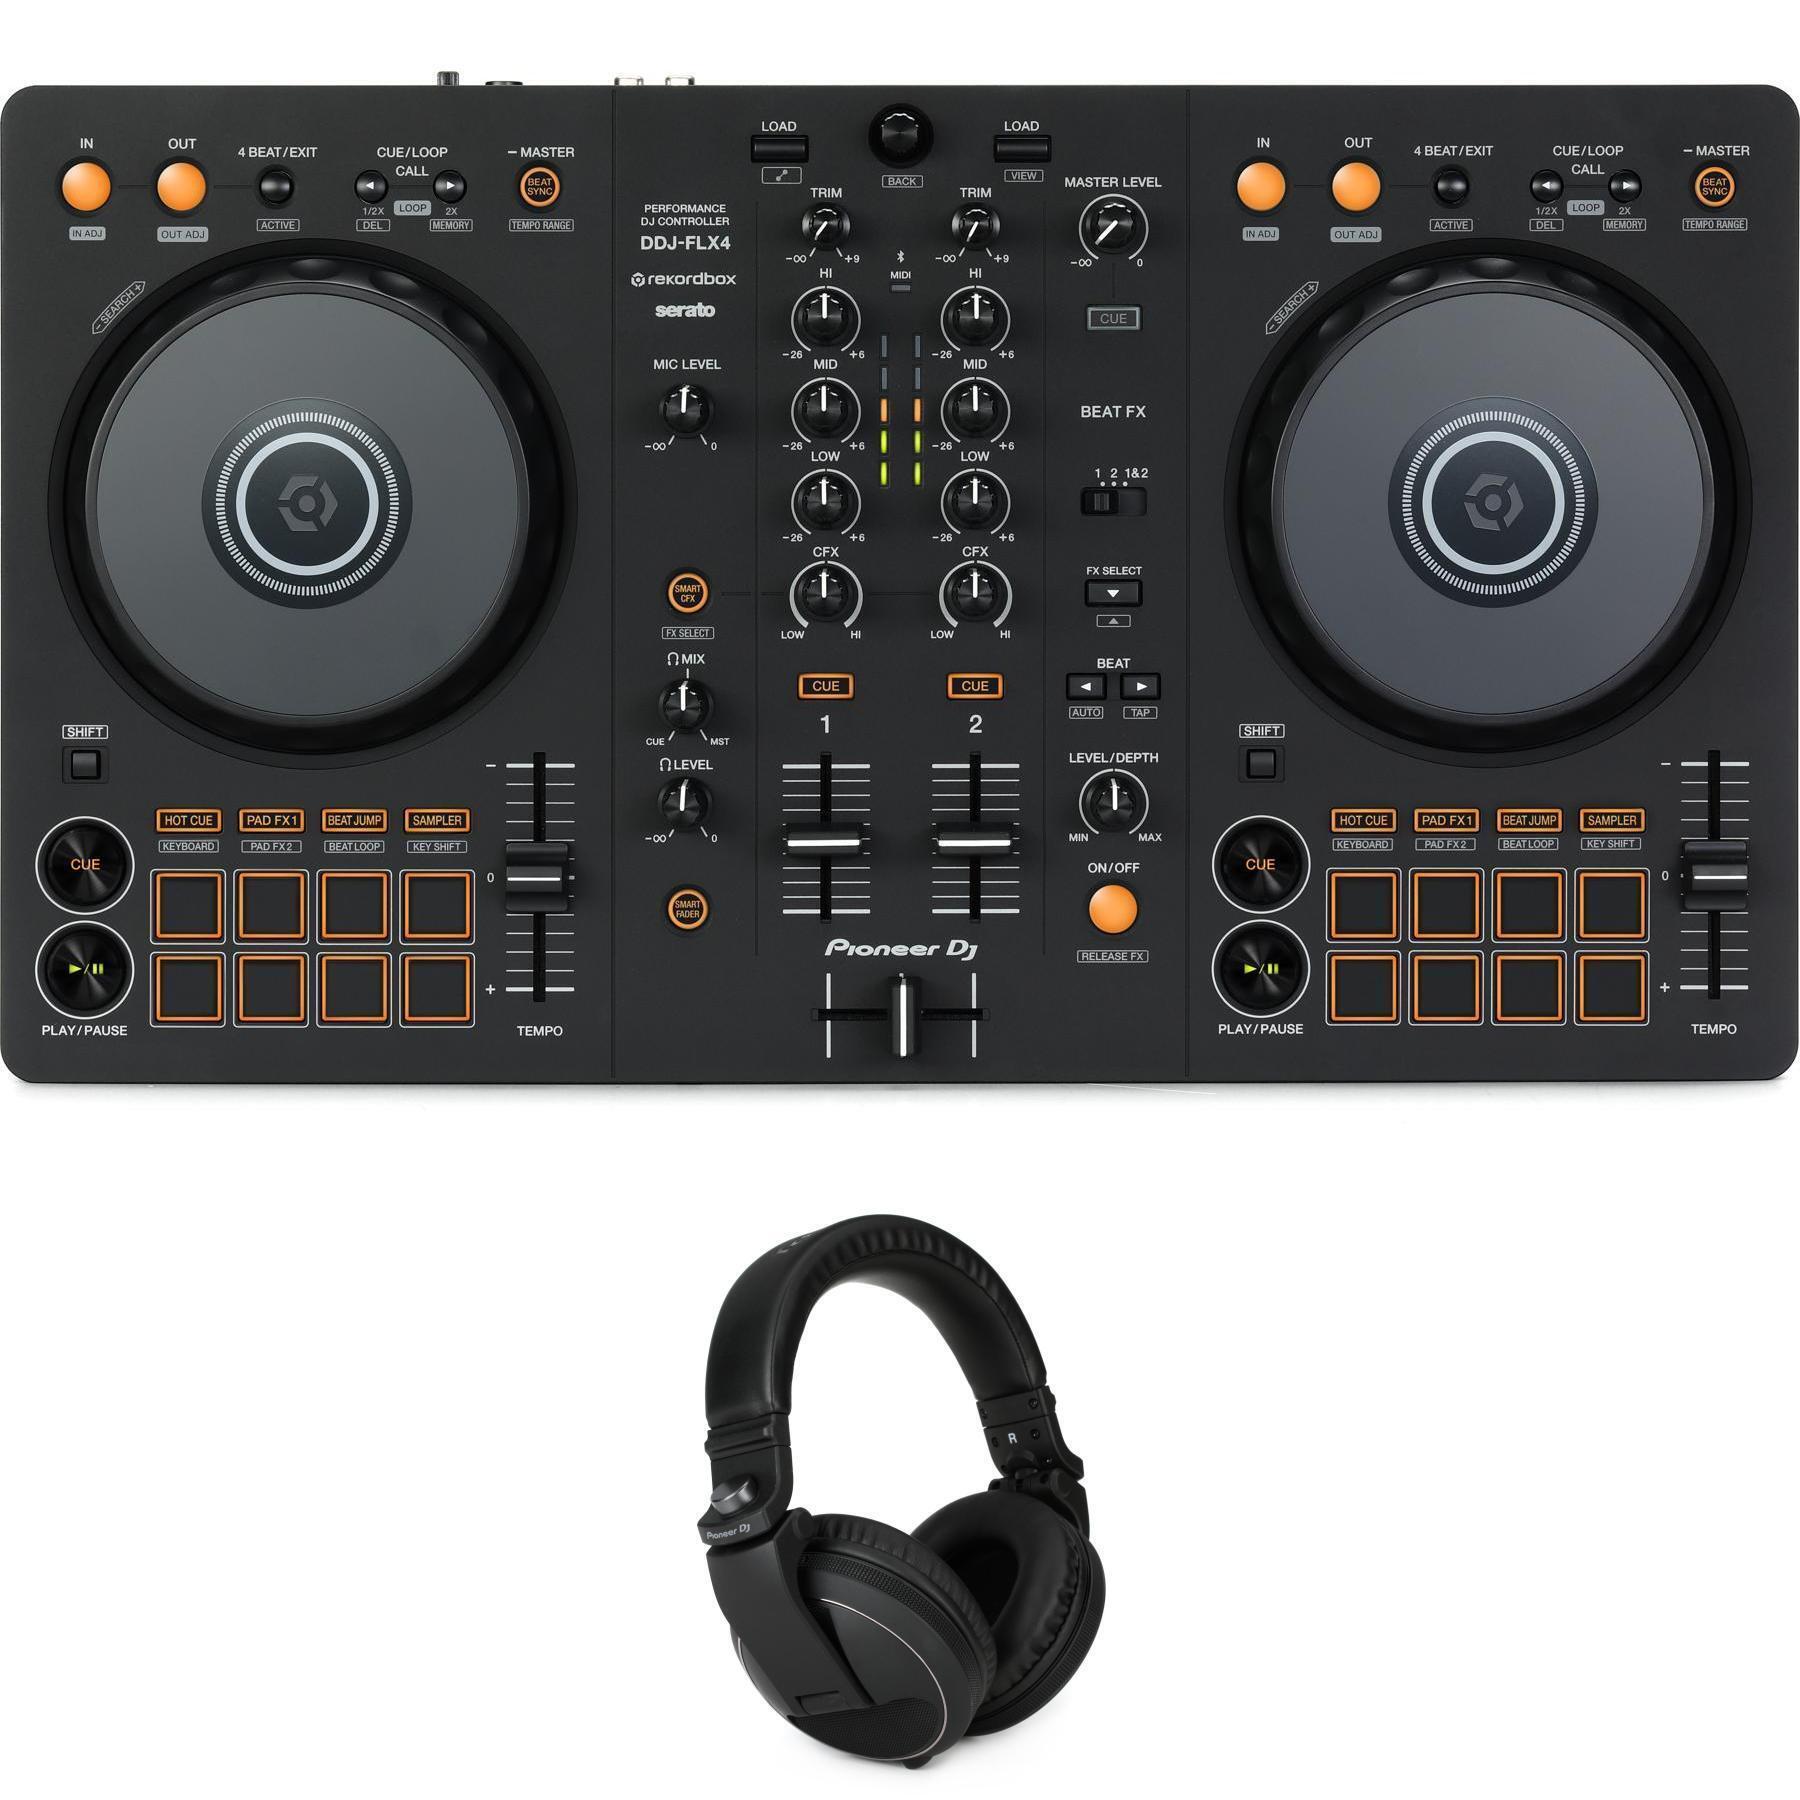 Pioneer DJ DDJ-FLX4 2-deck Rekordbox and Serato DJ Controller - Graphite  and Headphones